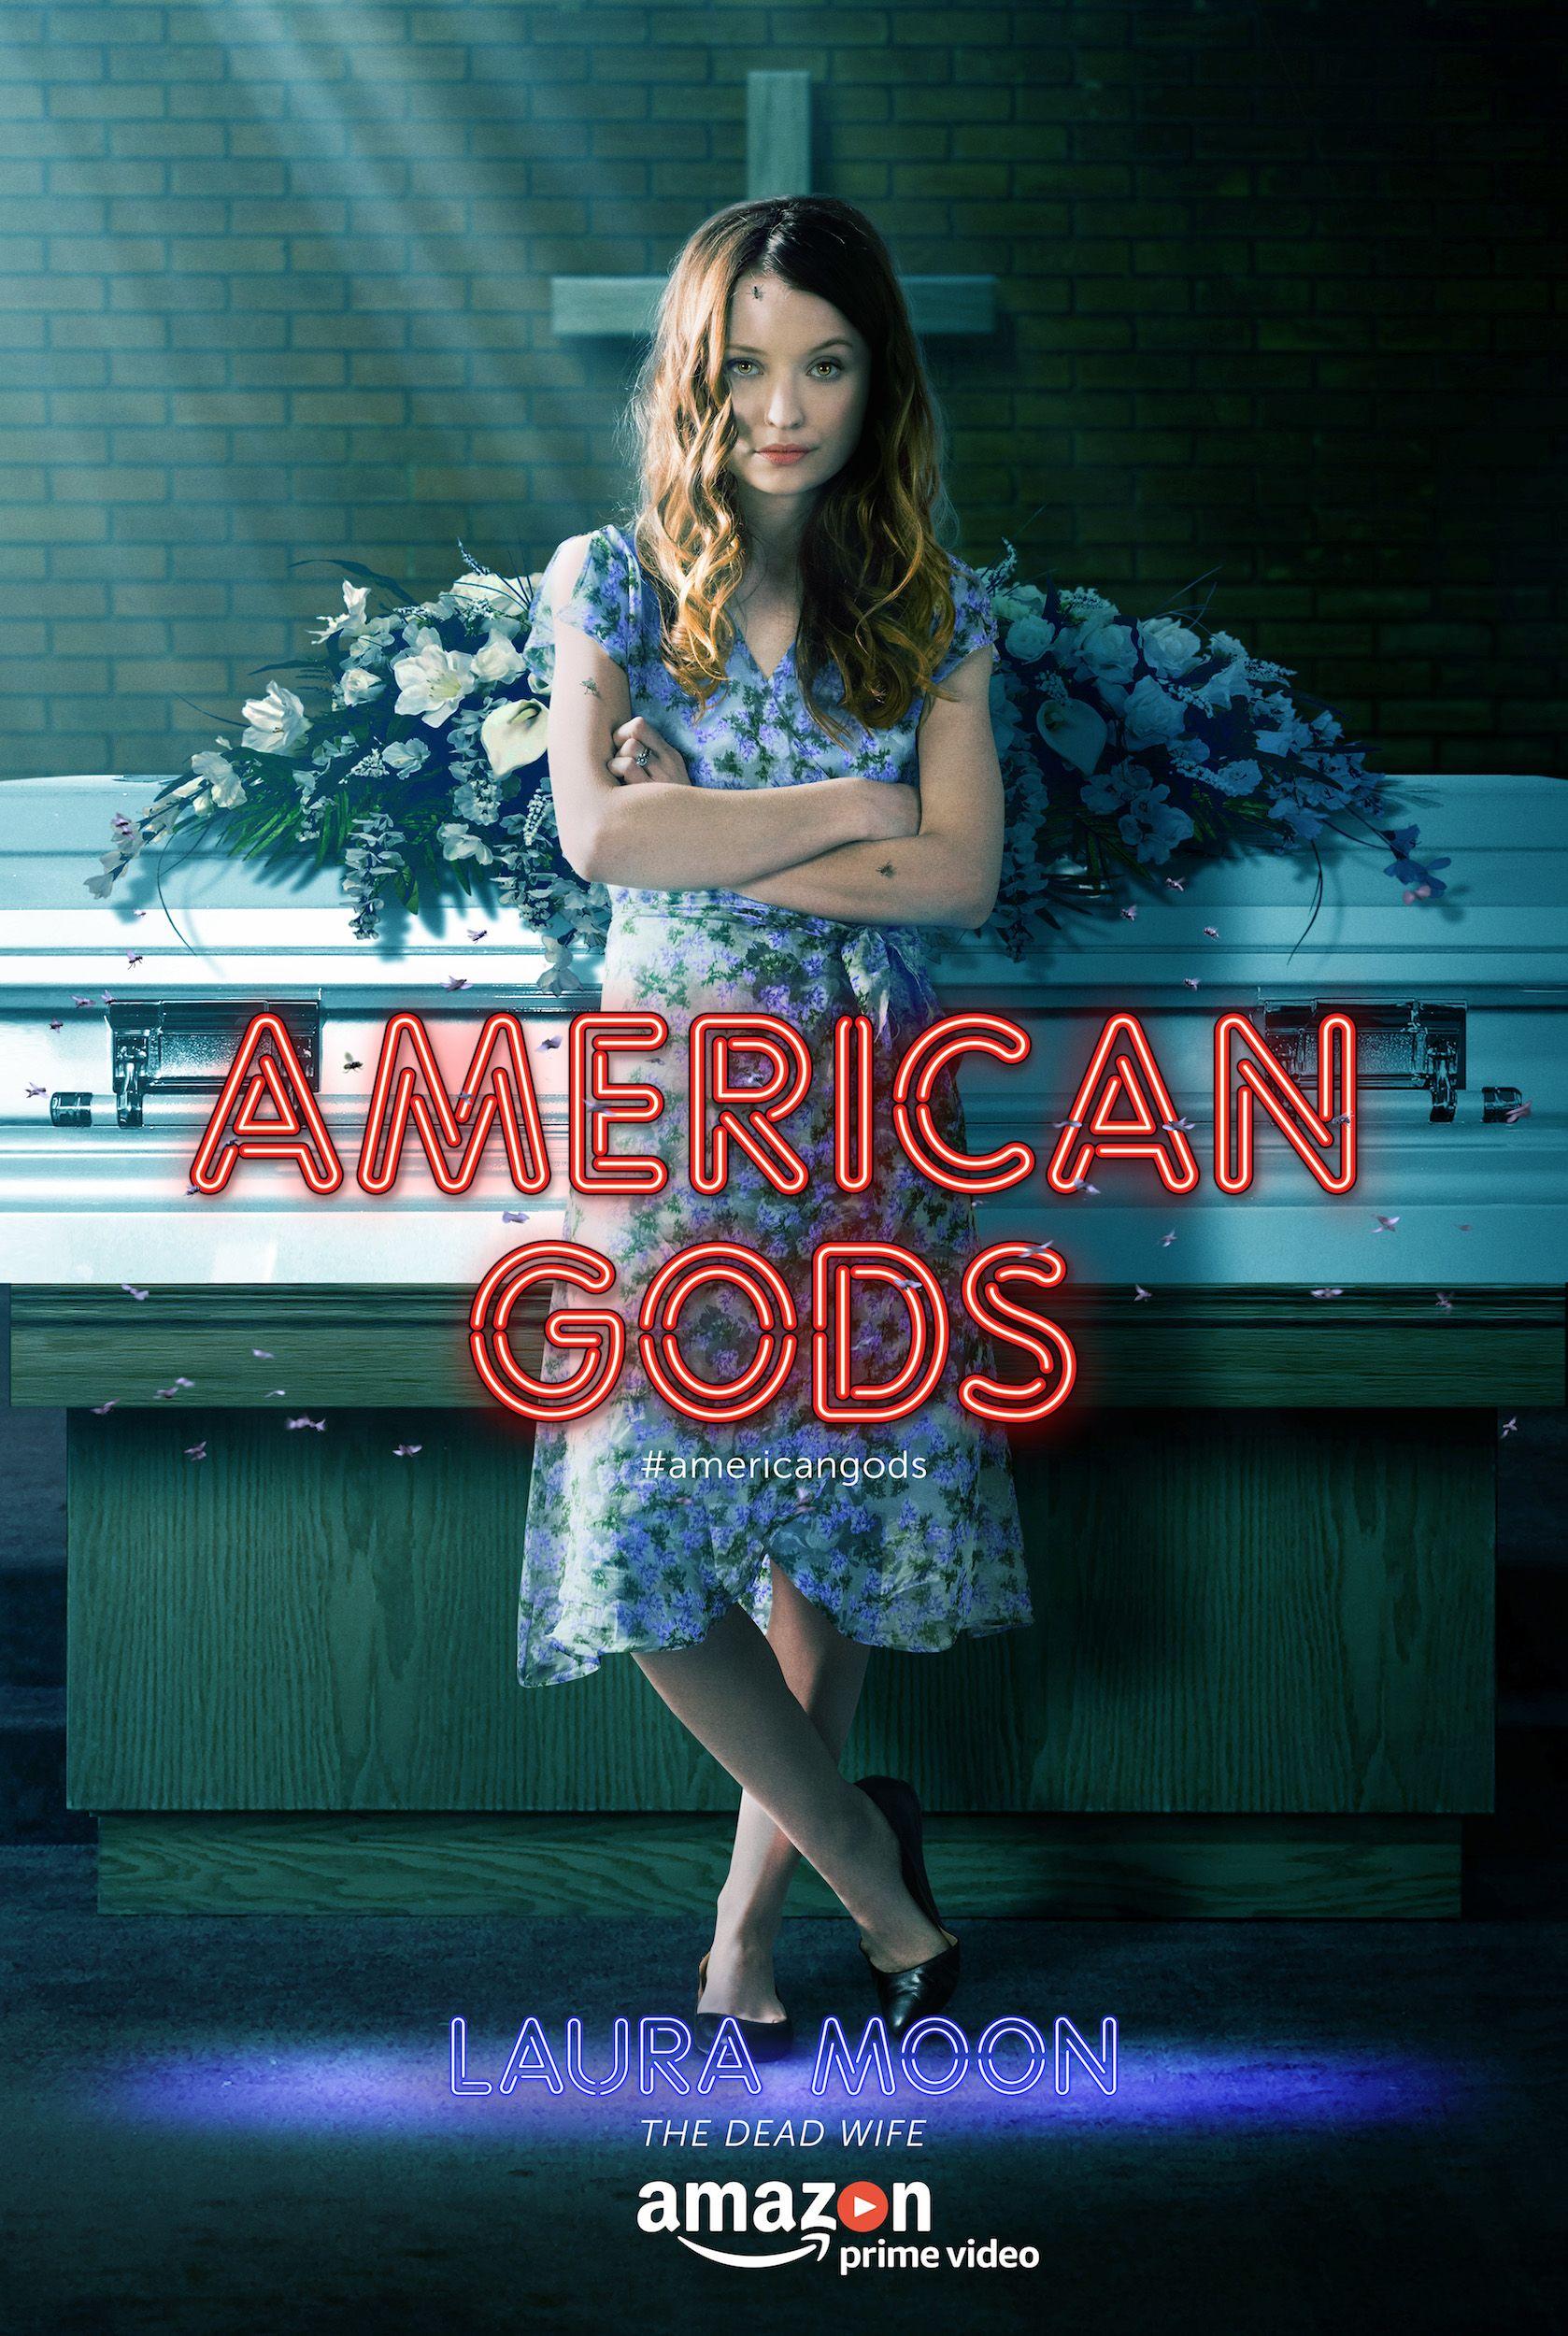 American Gods Photo & Posters. Den of Geek